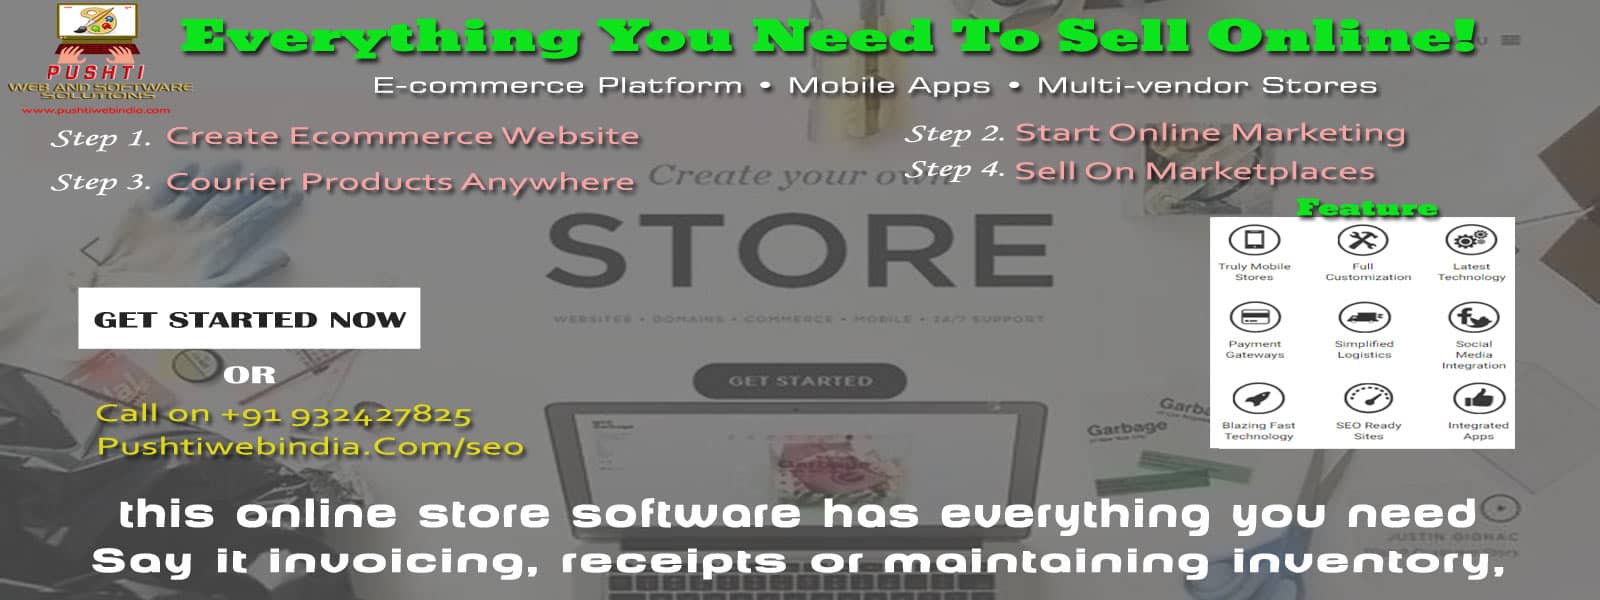 ecommerce website, ecommerce software, multi vendor store, e-commerce platform, ecommerce mobile app